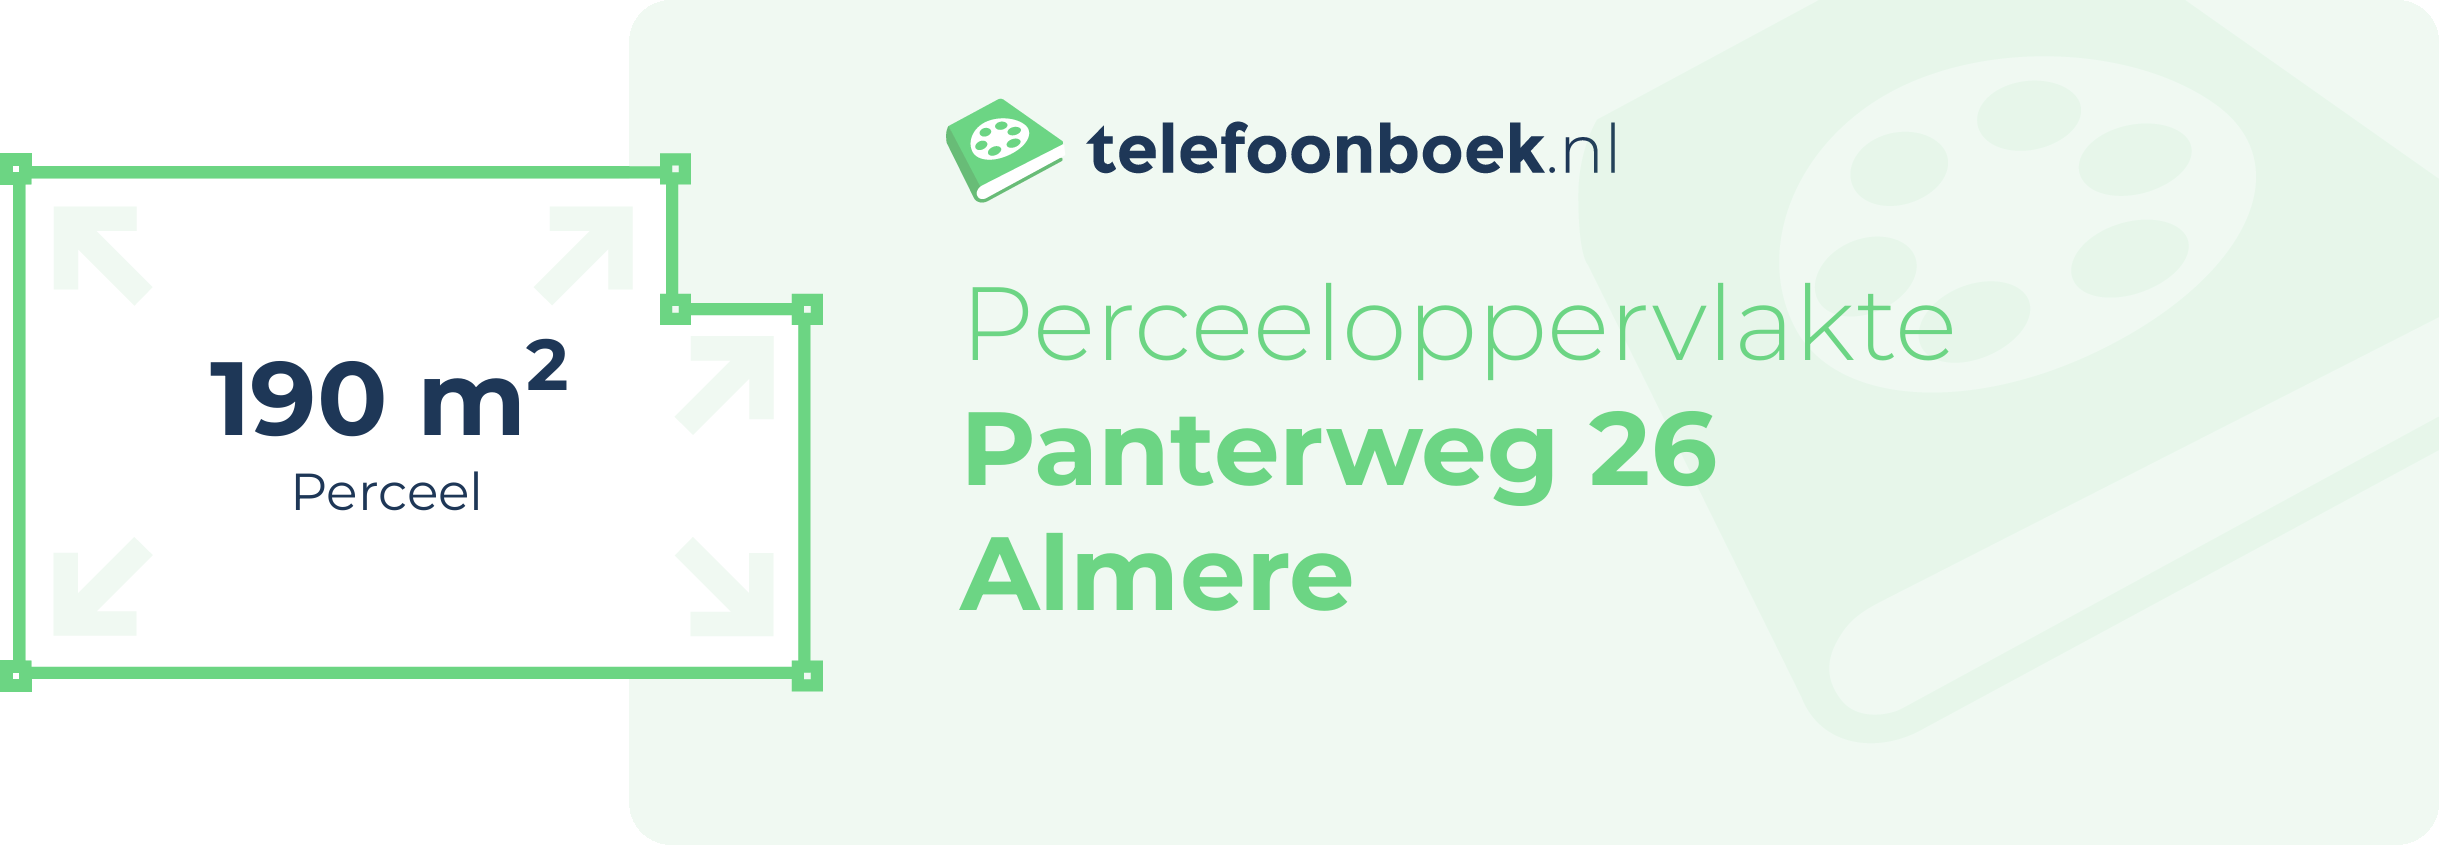 Perceeloppervlakte Panterweg 26 Almere